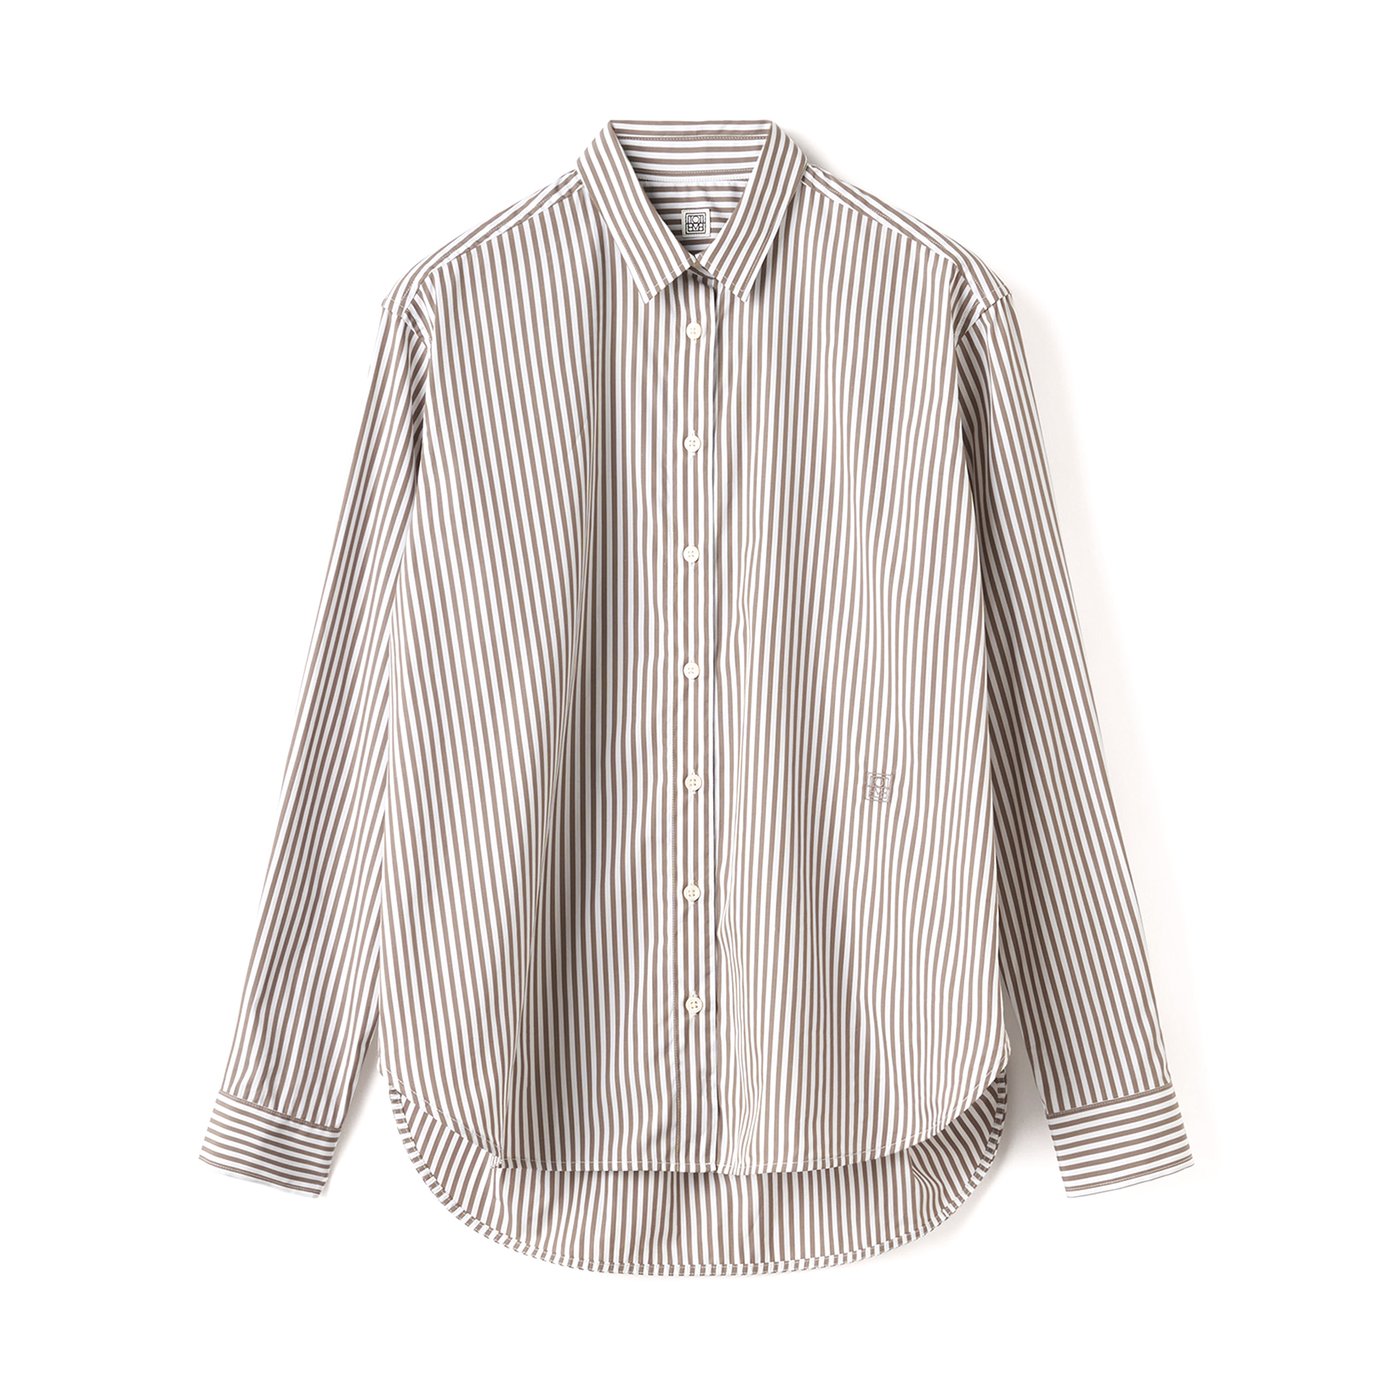 Grey Striped Shirt With Denim Jacket - Aesthetic Shirt Templates